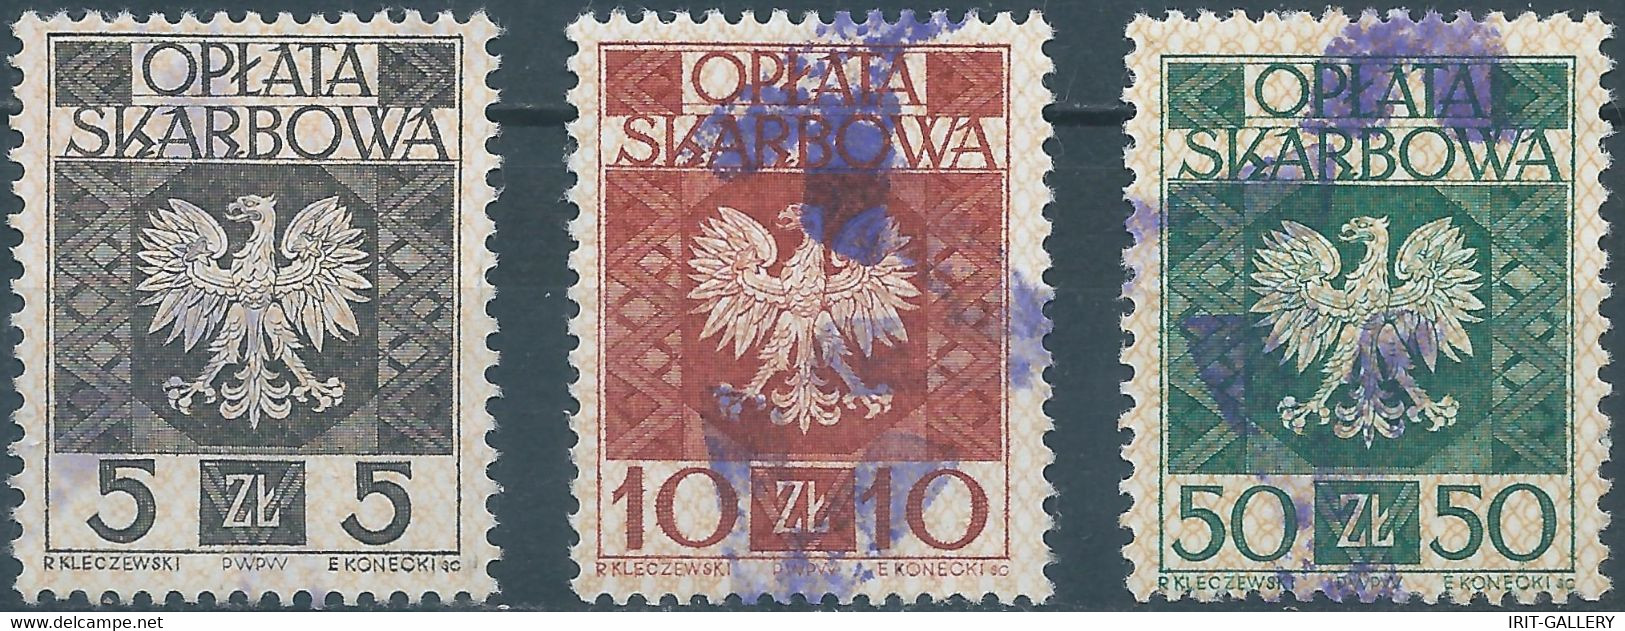 POLONIA-POLAND-POLSKA,1958 Revenue Stamp Fiscal TaX 5-10- 50ZL (OPLATA SKARBOWA) Used - Fiscali